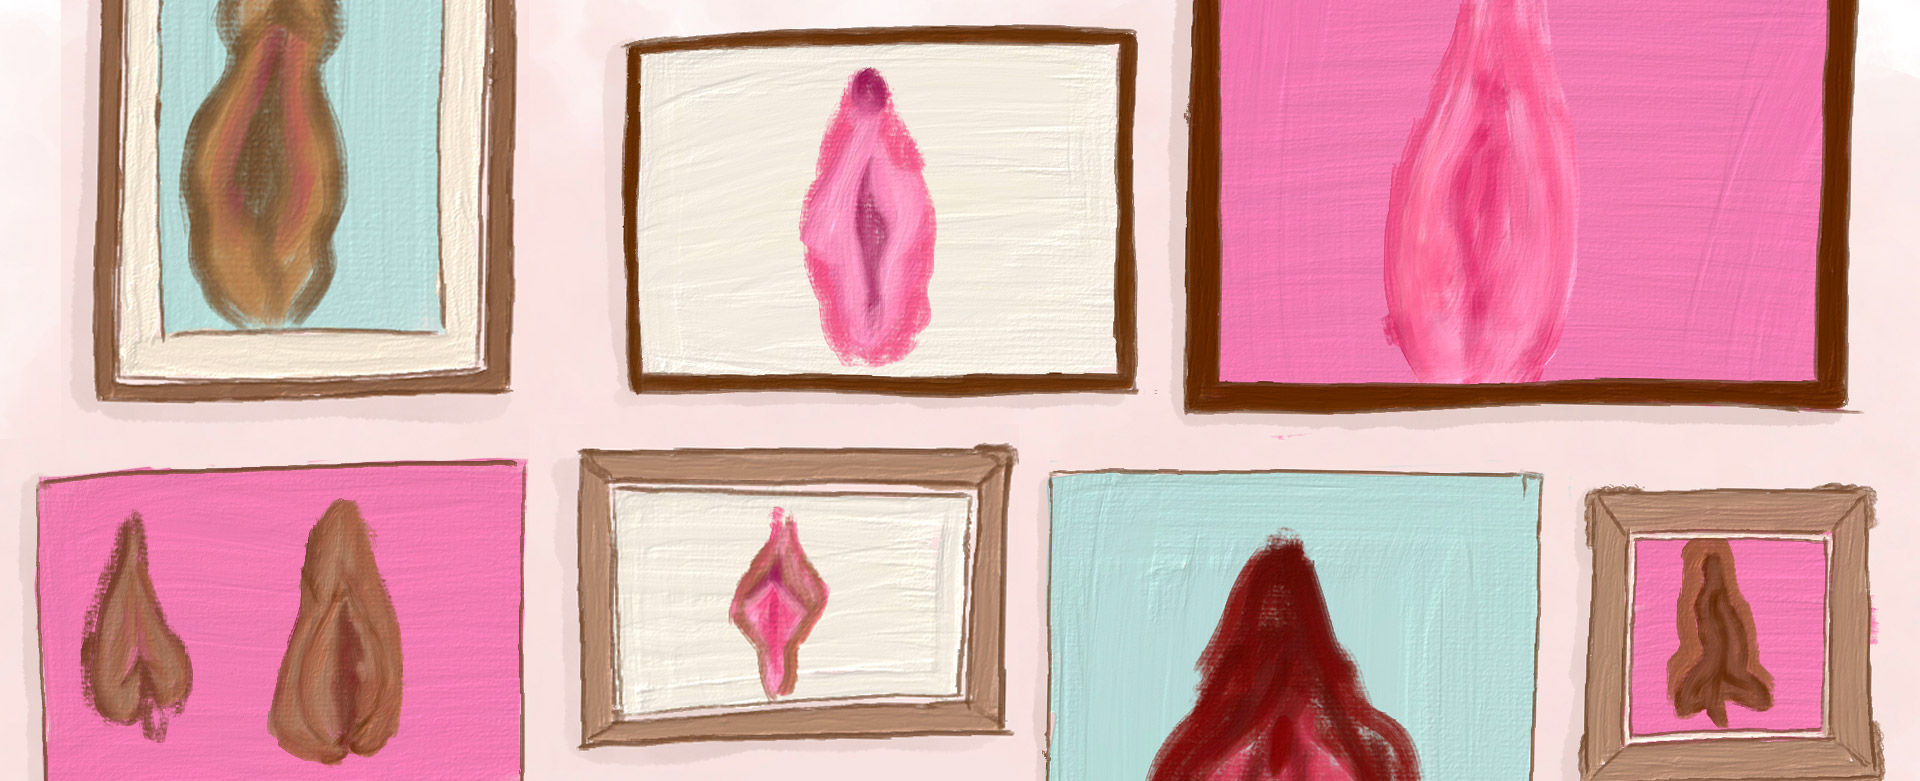 A gallery wall of illustrated Vulvas